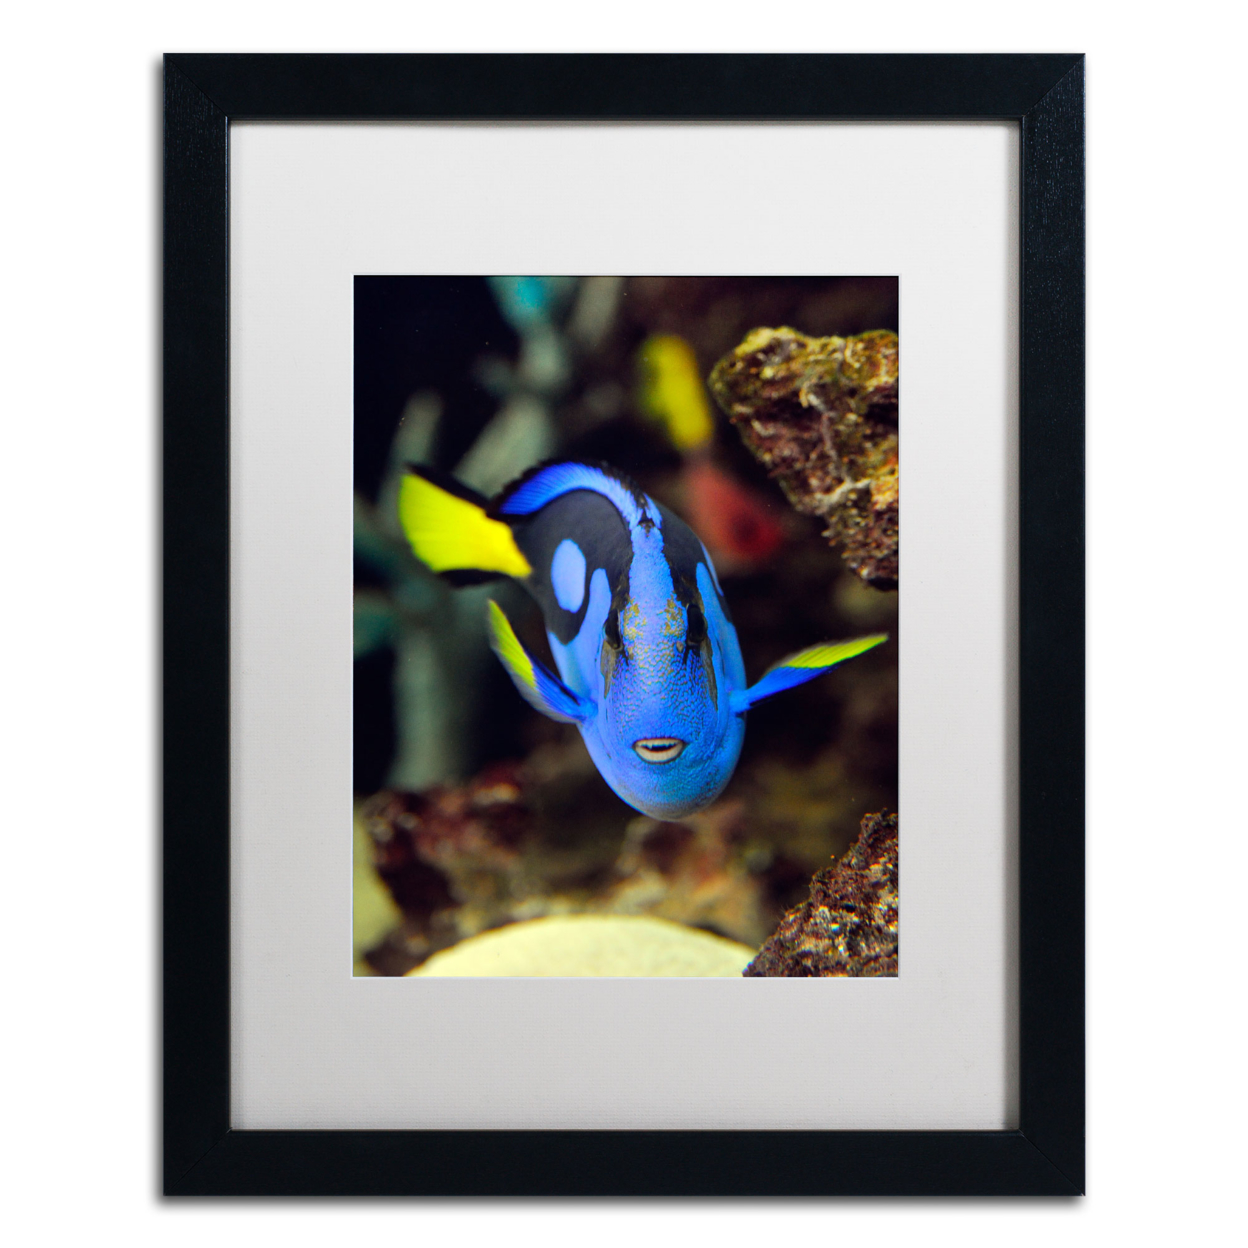 Kurt Shaffer 'Parrot Fish' Black Wooden Framed Art 18 X 22 Inches